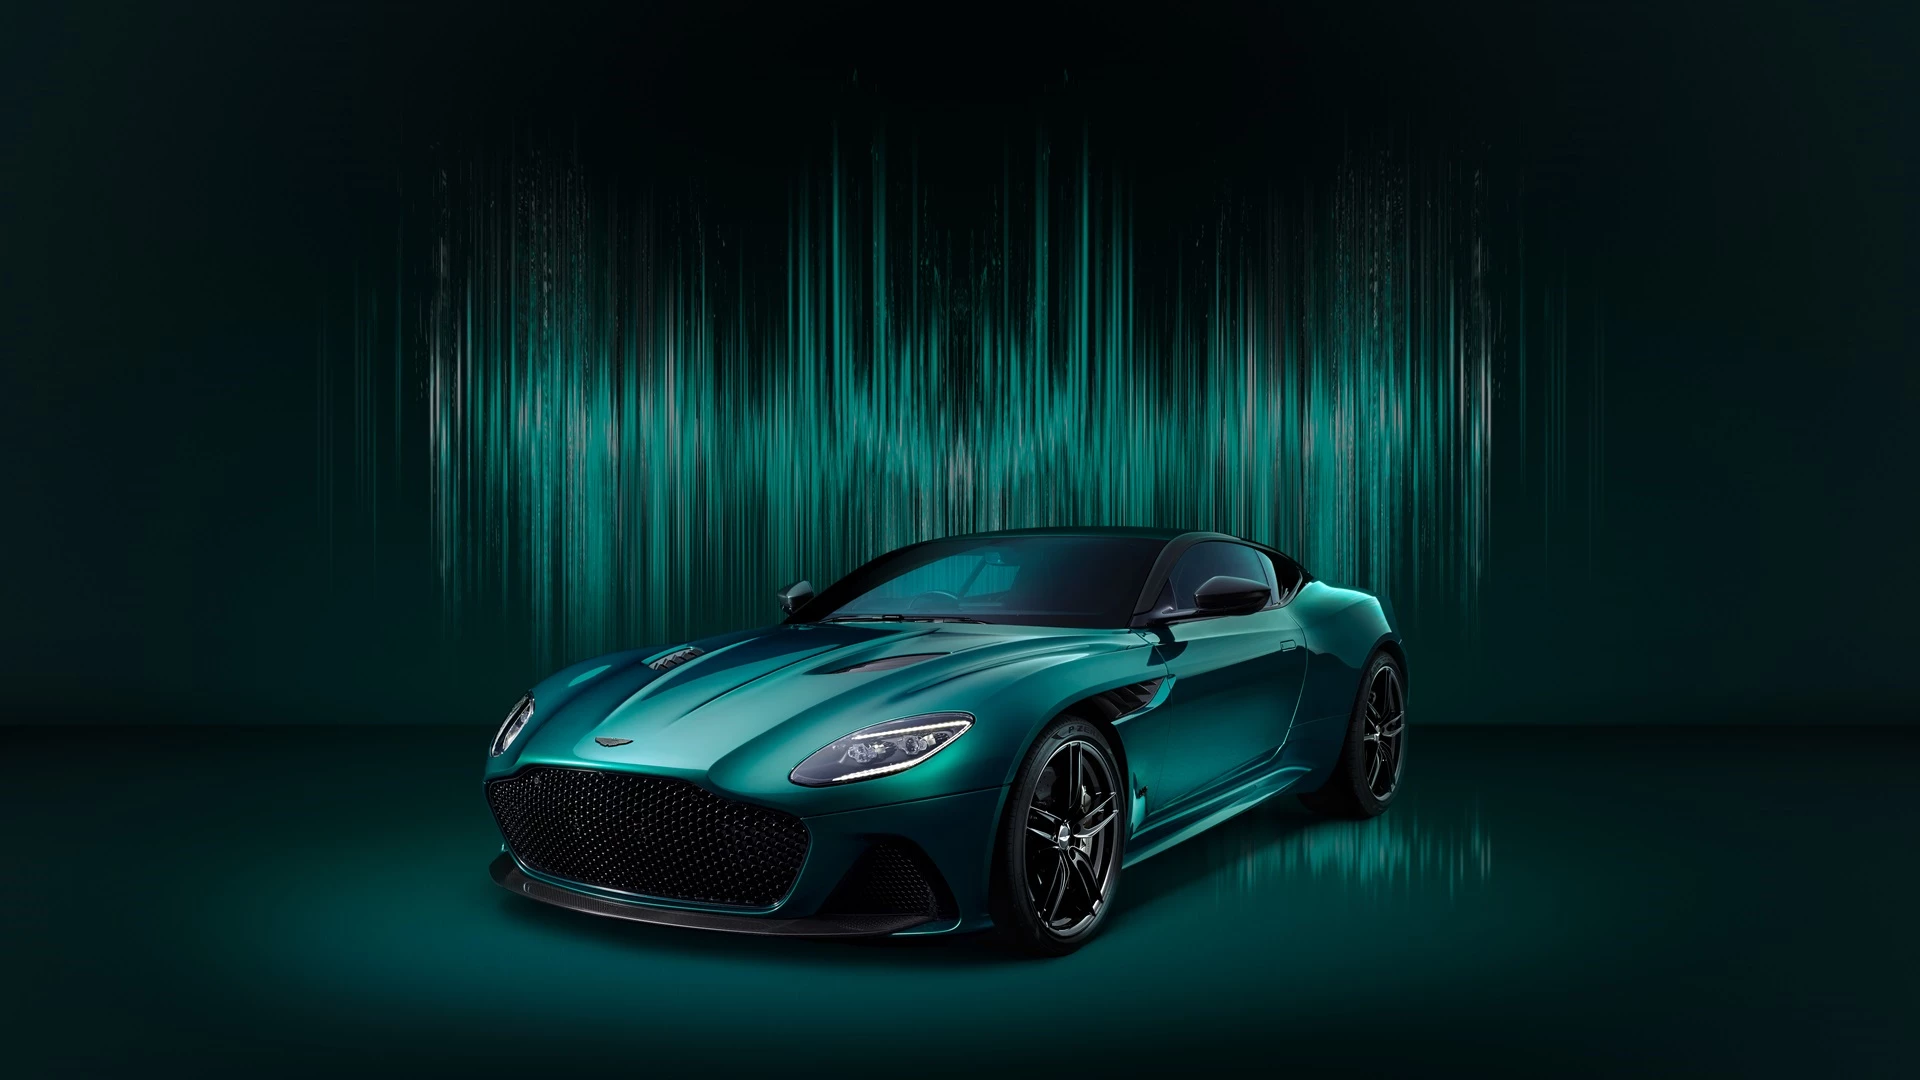 Harga Aston Martin DBS Superleggera Terbaru, Spesifikasi dan Interior 2022!